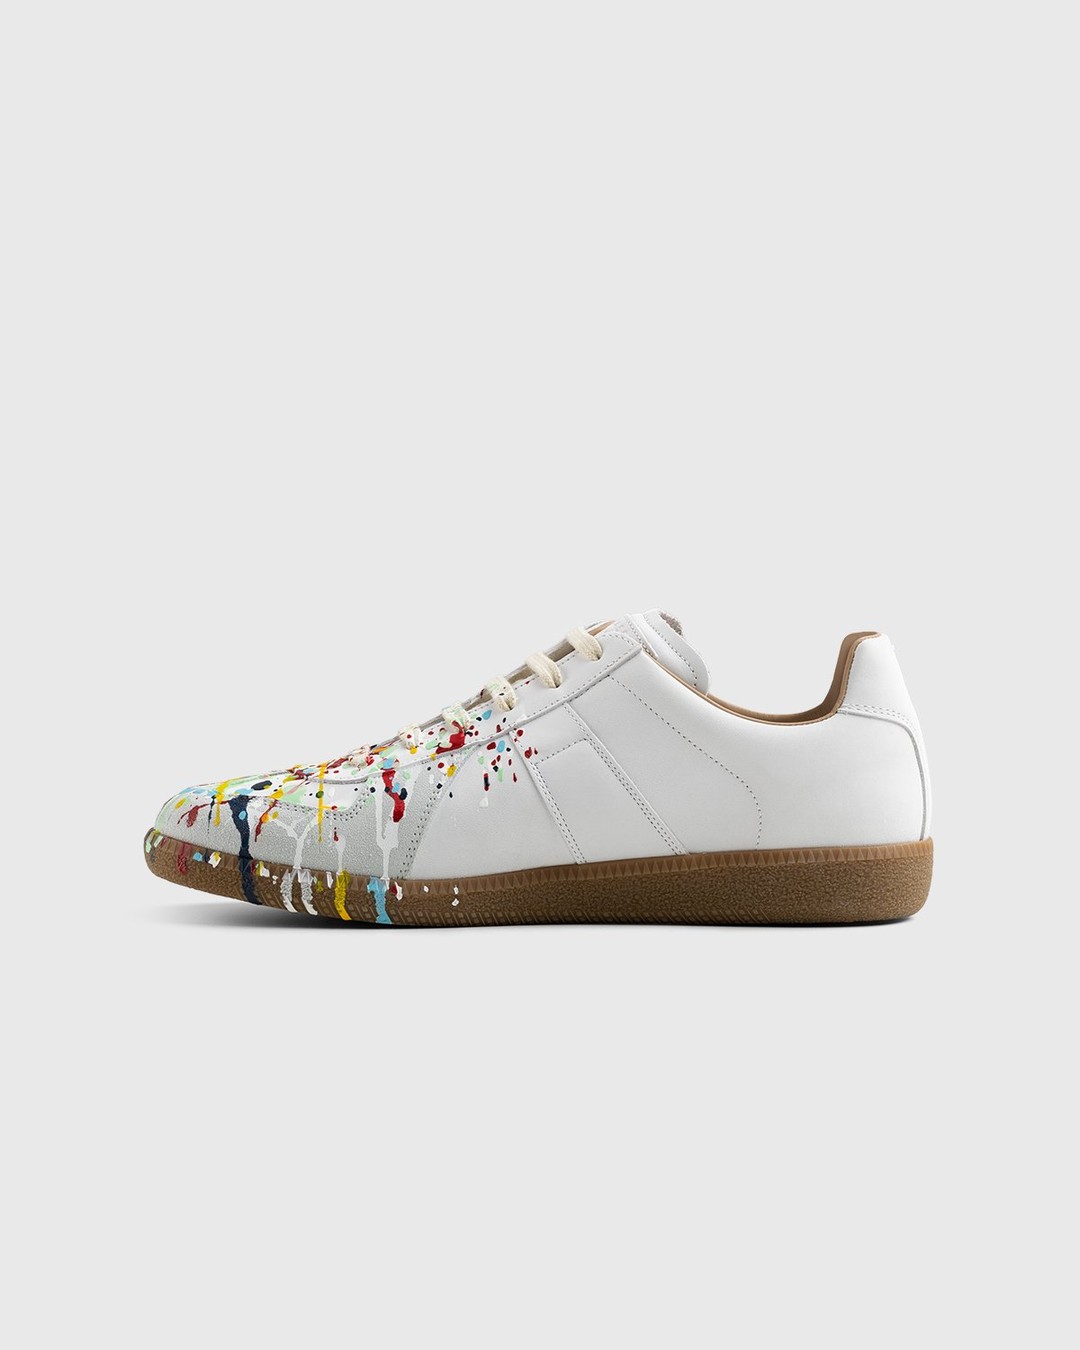 Margiela – Replica Paint Drop Sneakers White Highsnobiety